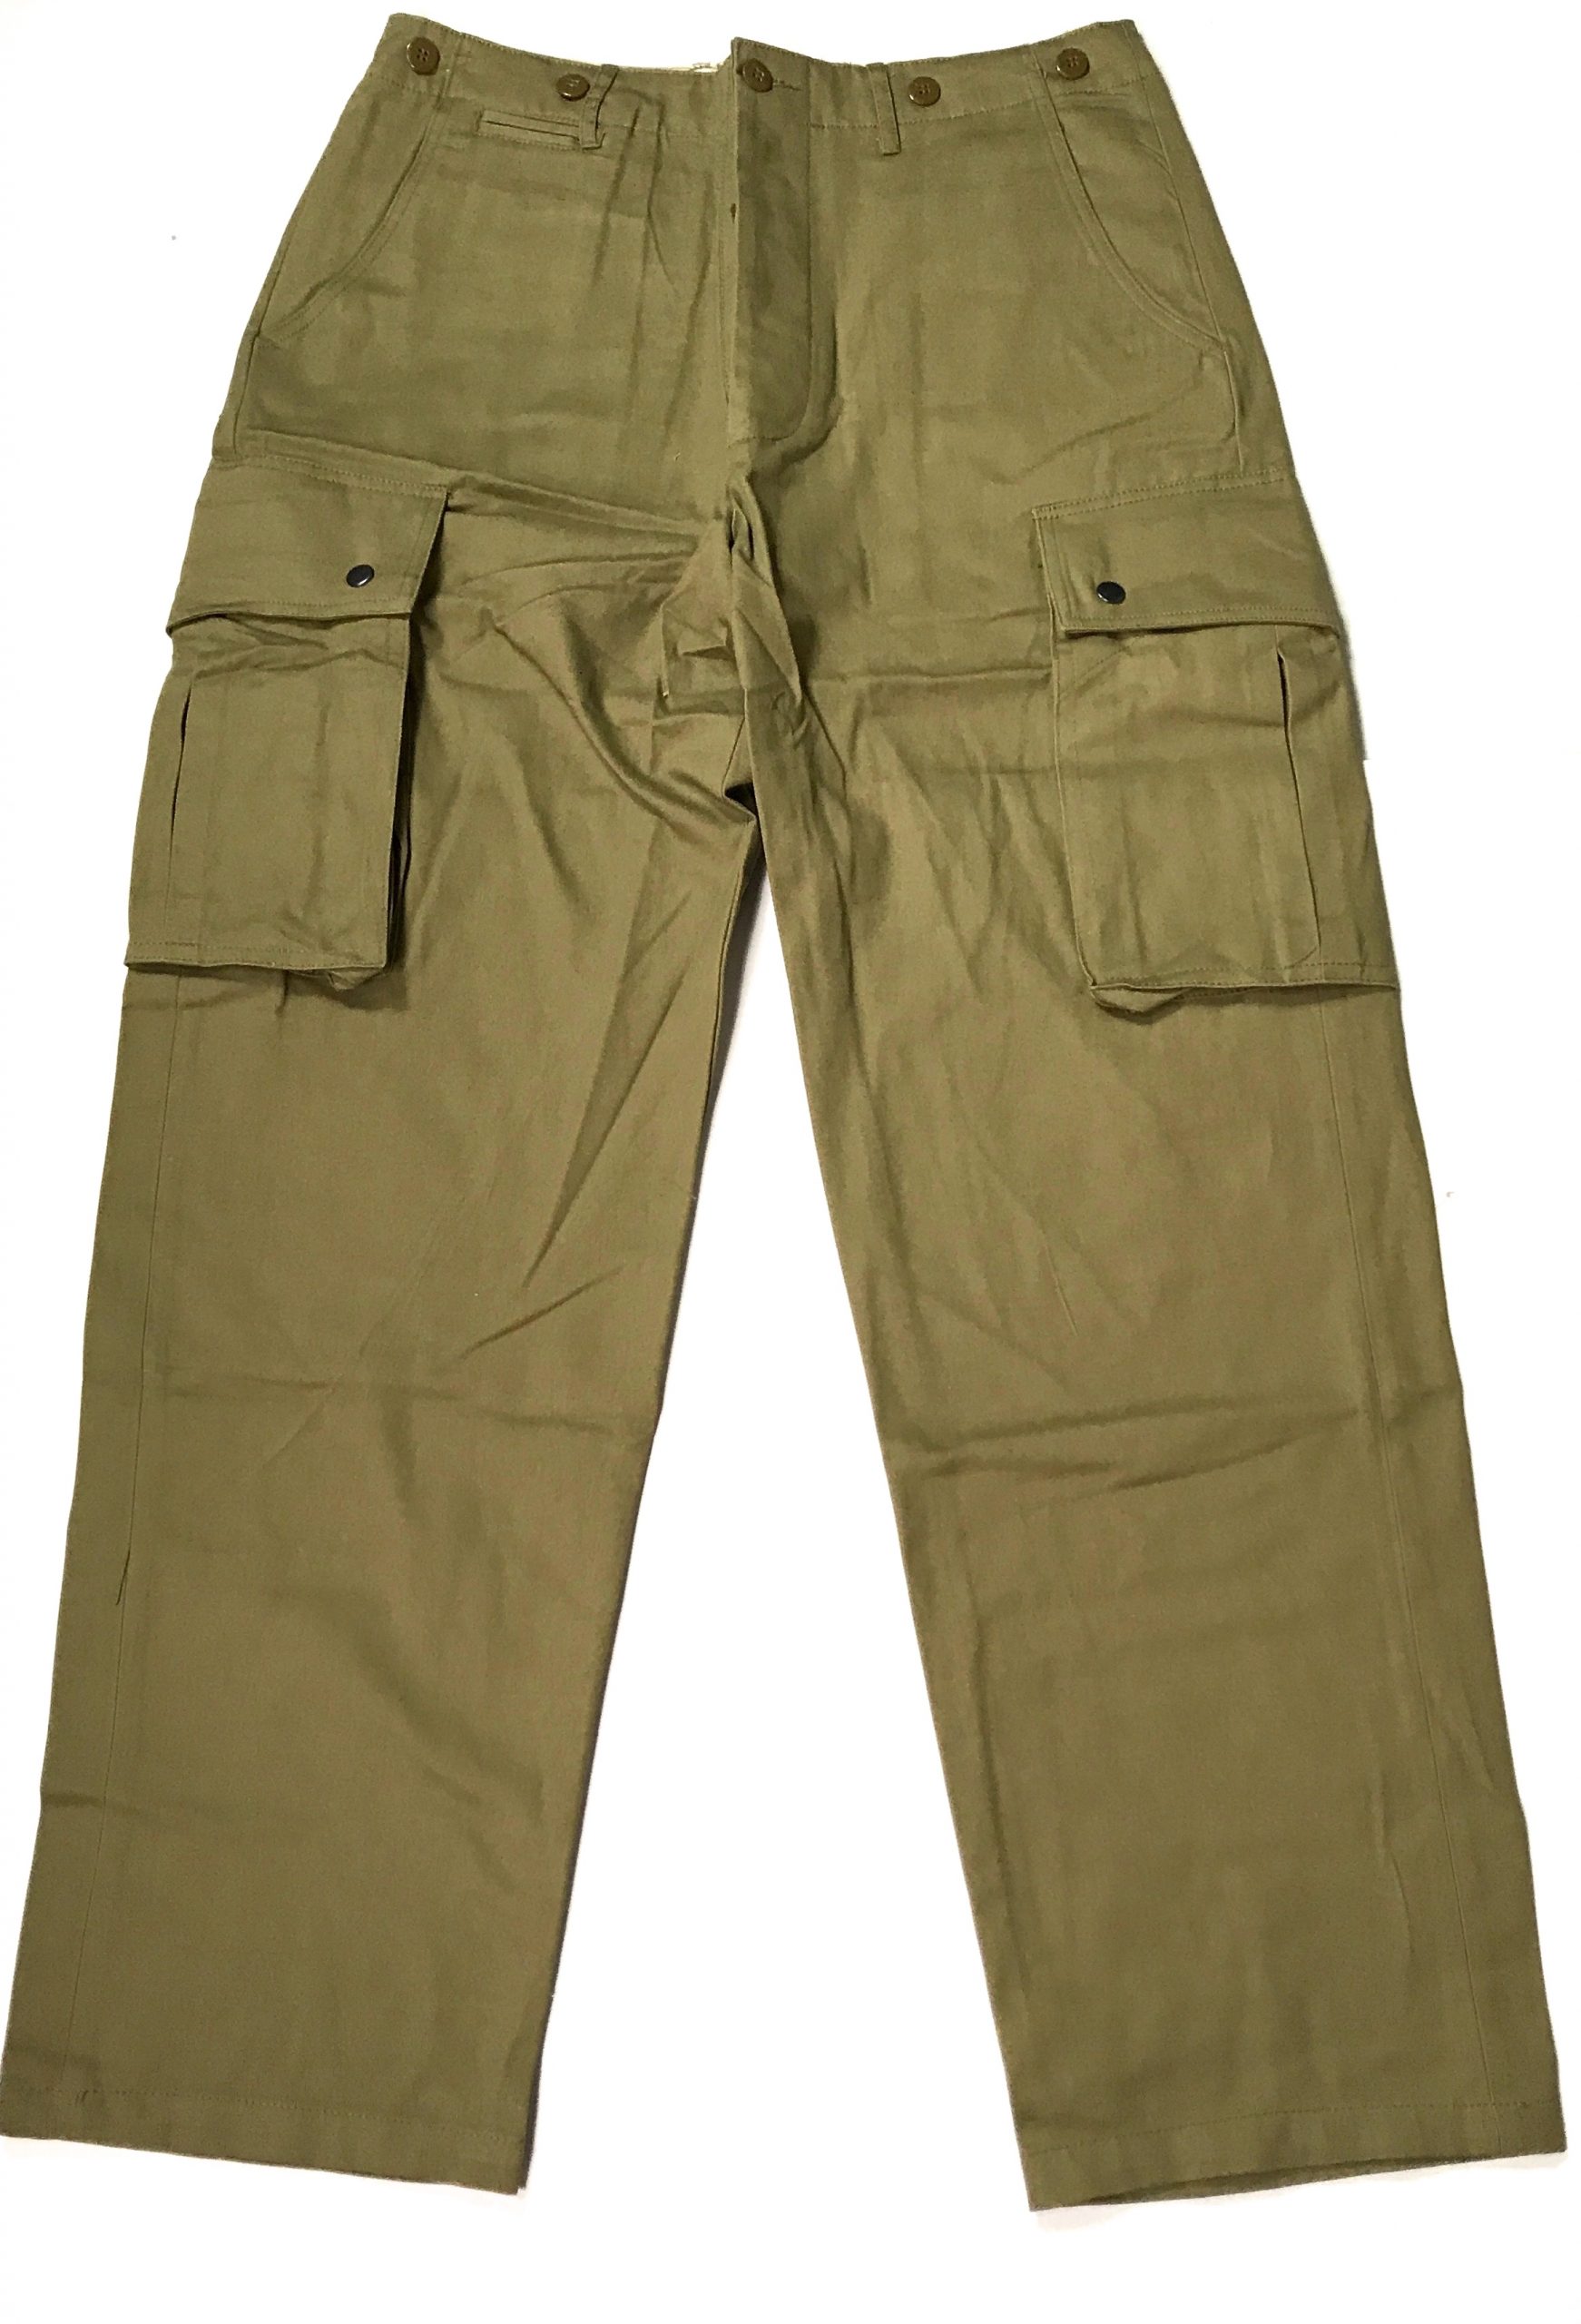 Rev'It Airborne Womens Base Layer Pants Dark Gray LG - Walmart.com